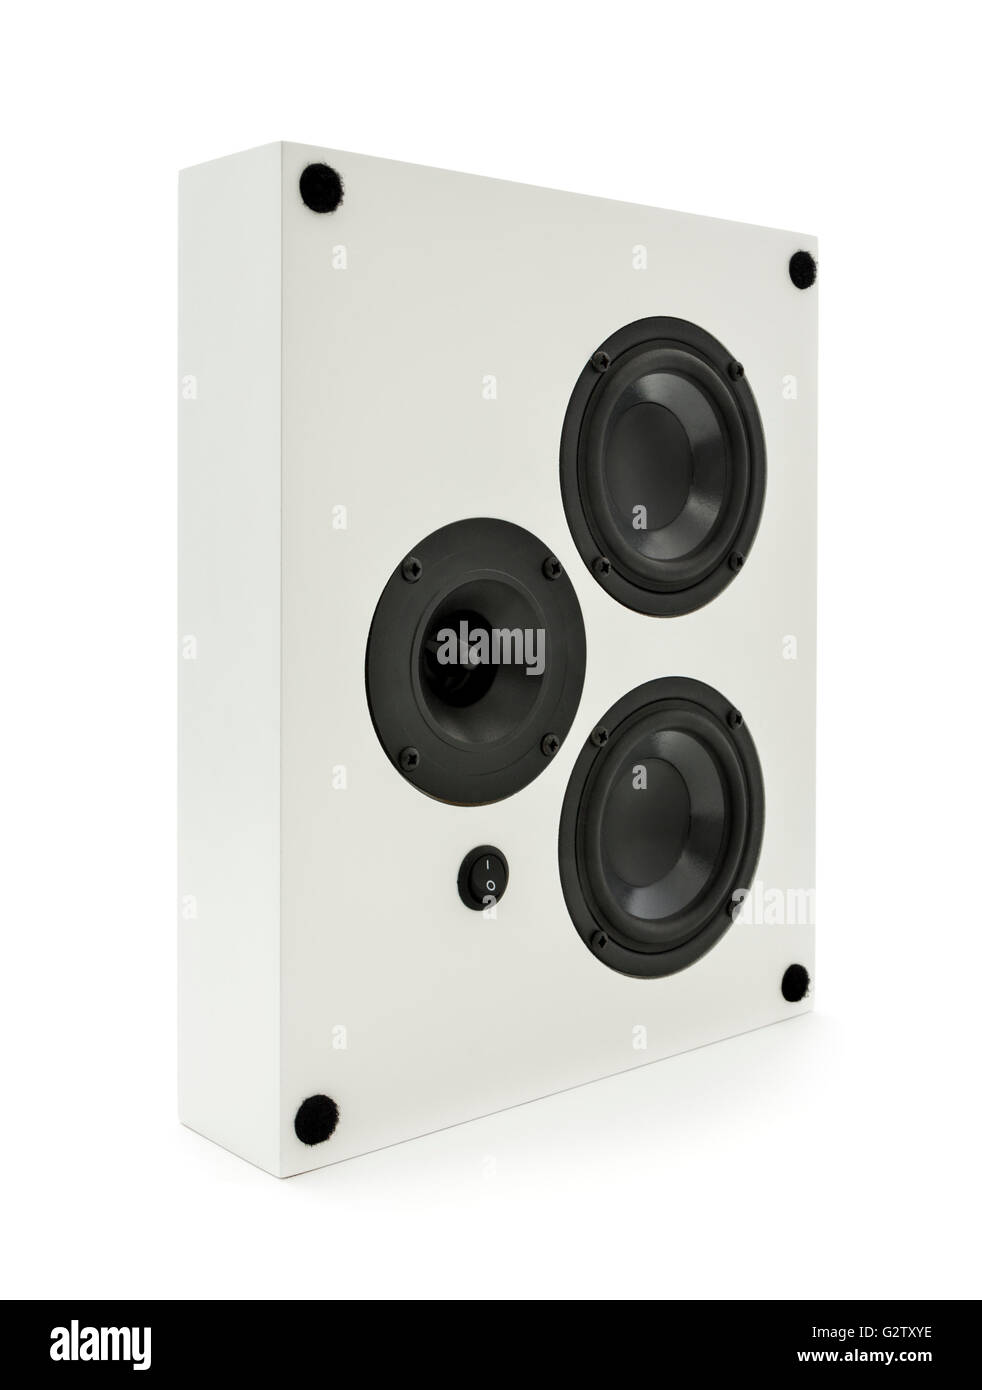 diablo speaker system